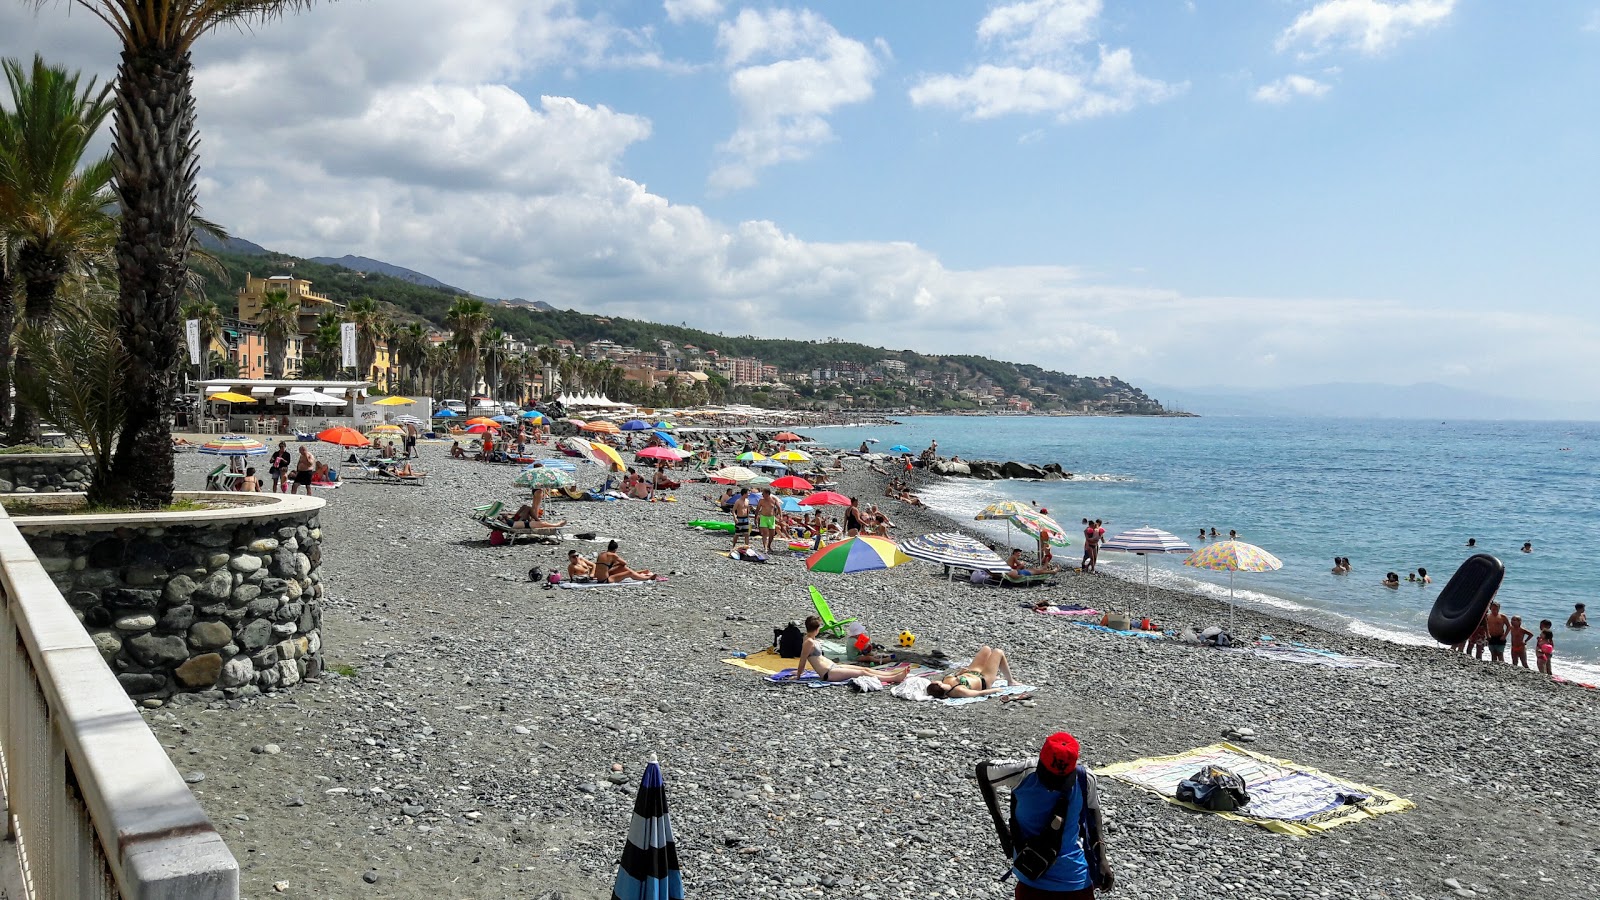 Foto van Spiaggia Cogoleto met gemiddeld niveau van netheid